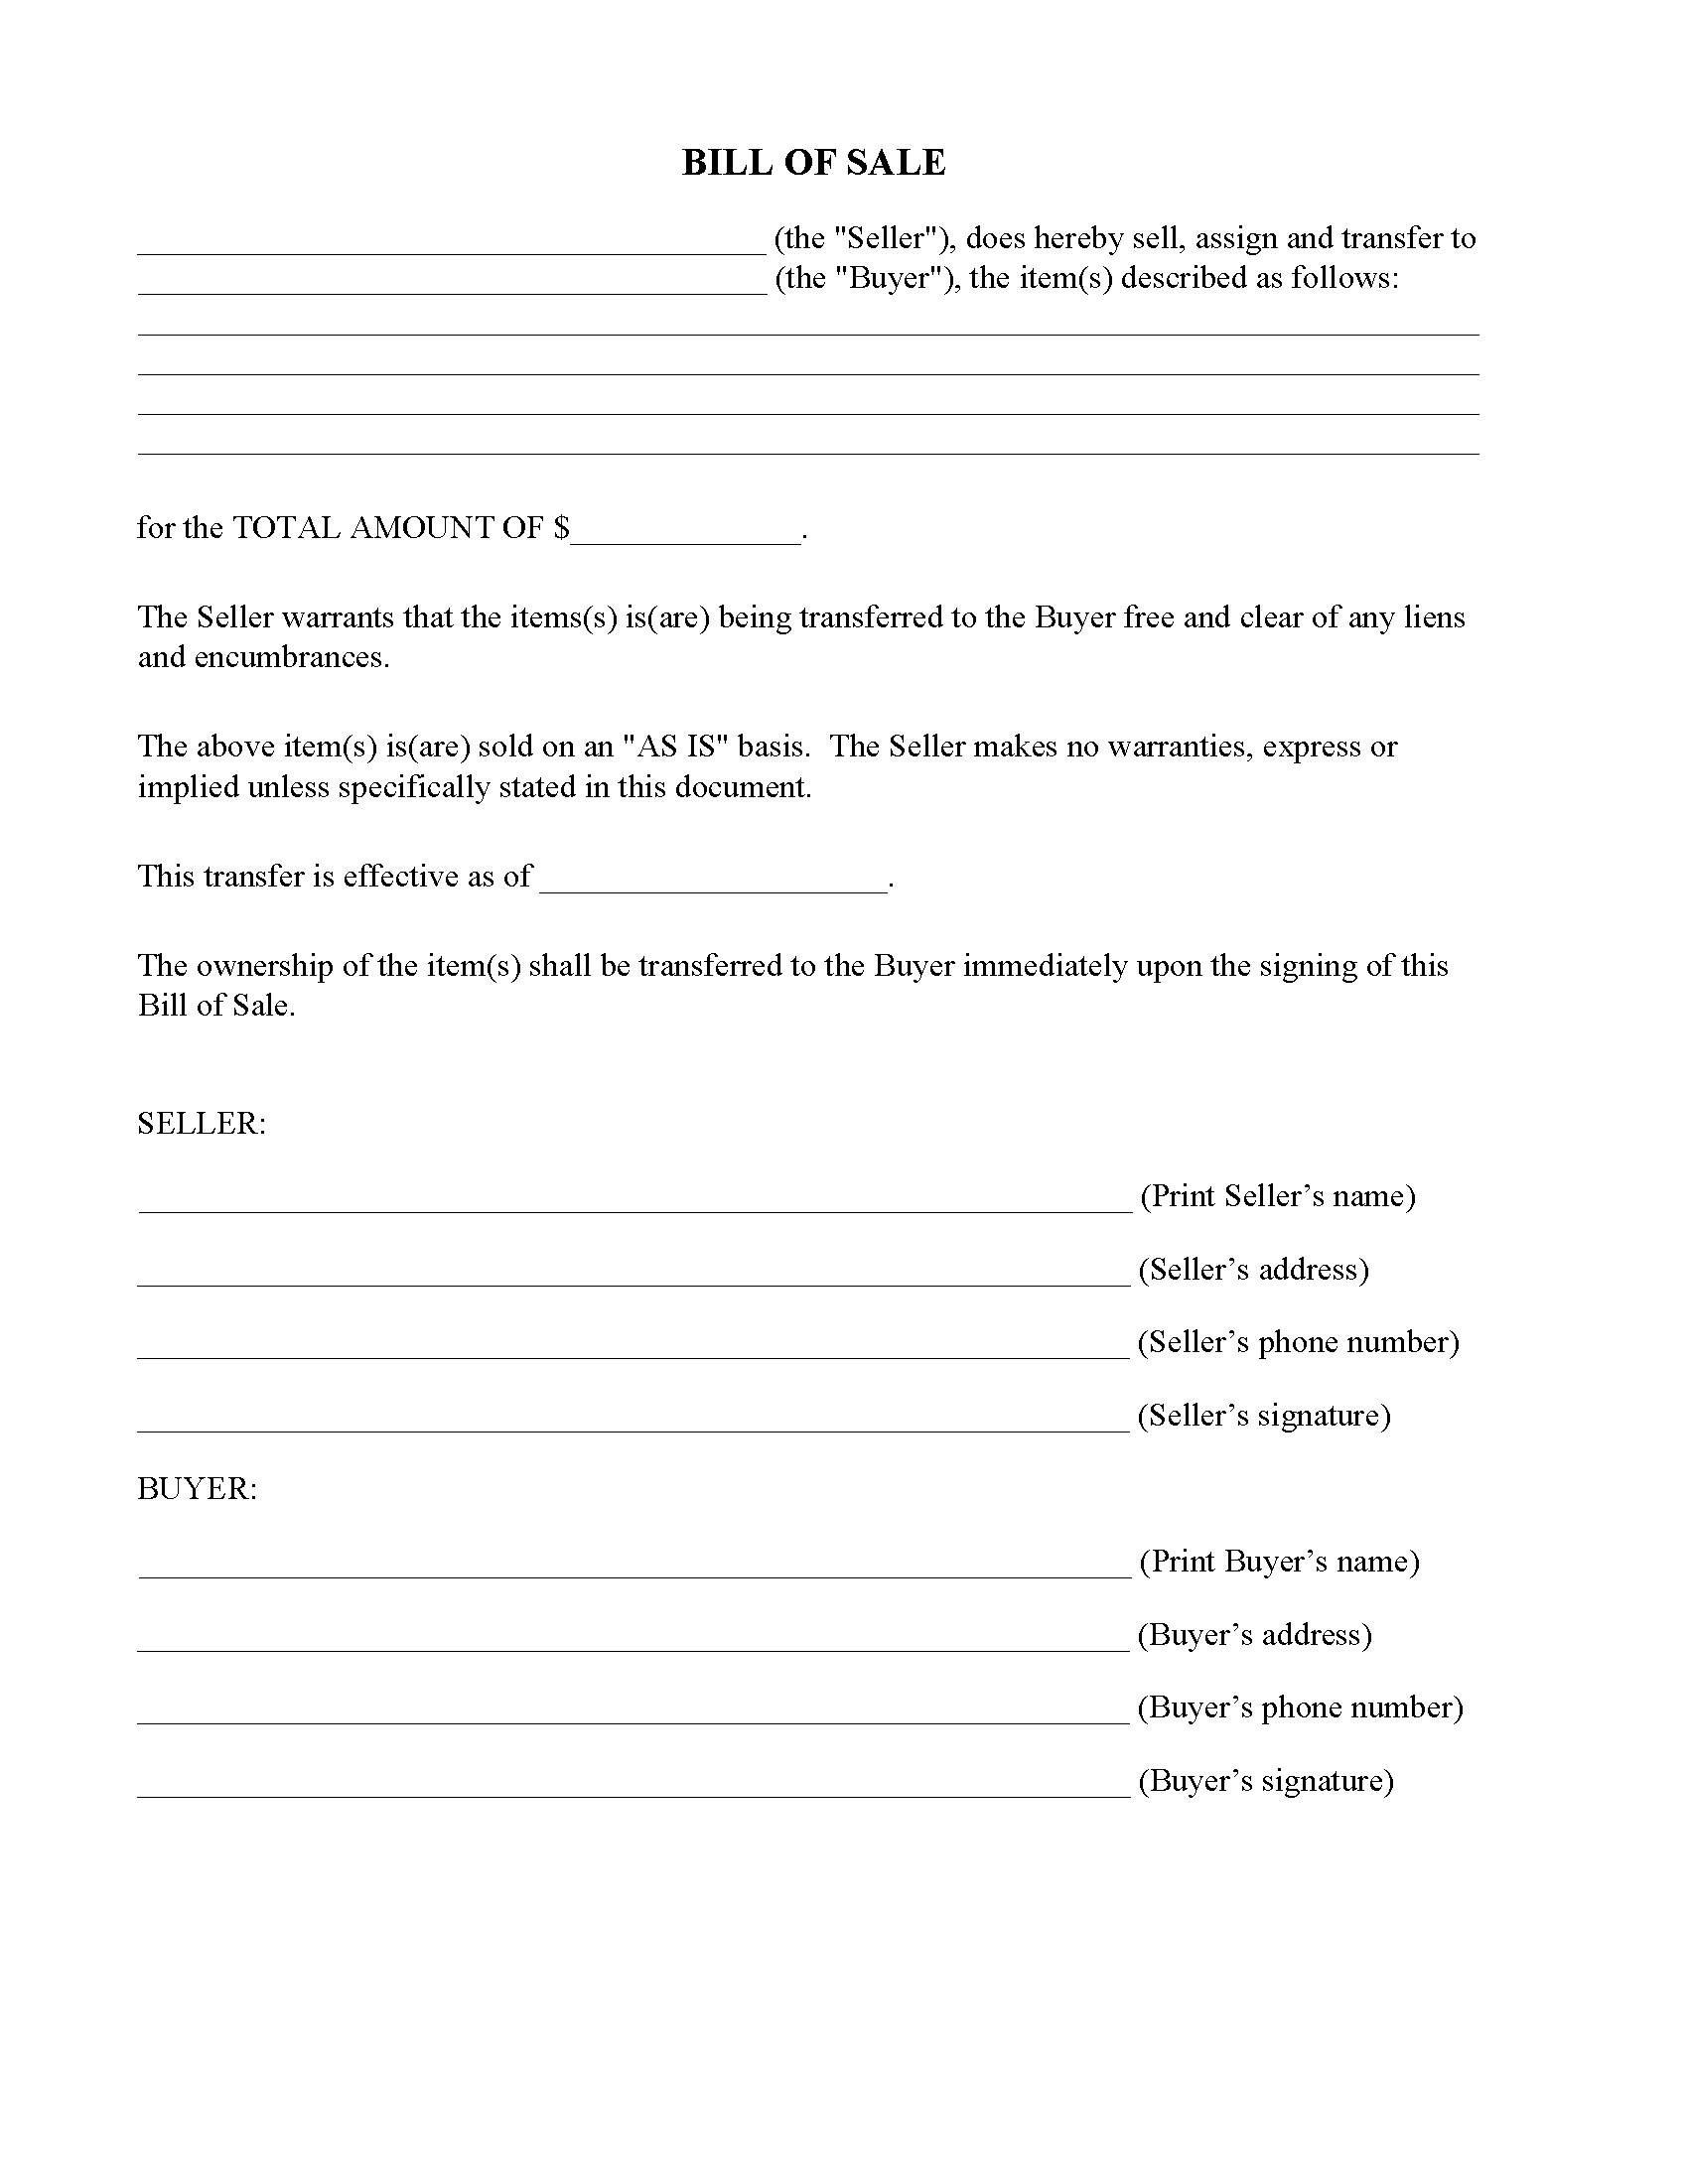 North Carolina Simple Bill of Sale Form - PDF - Free Printable Legal Forms